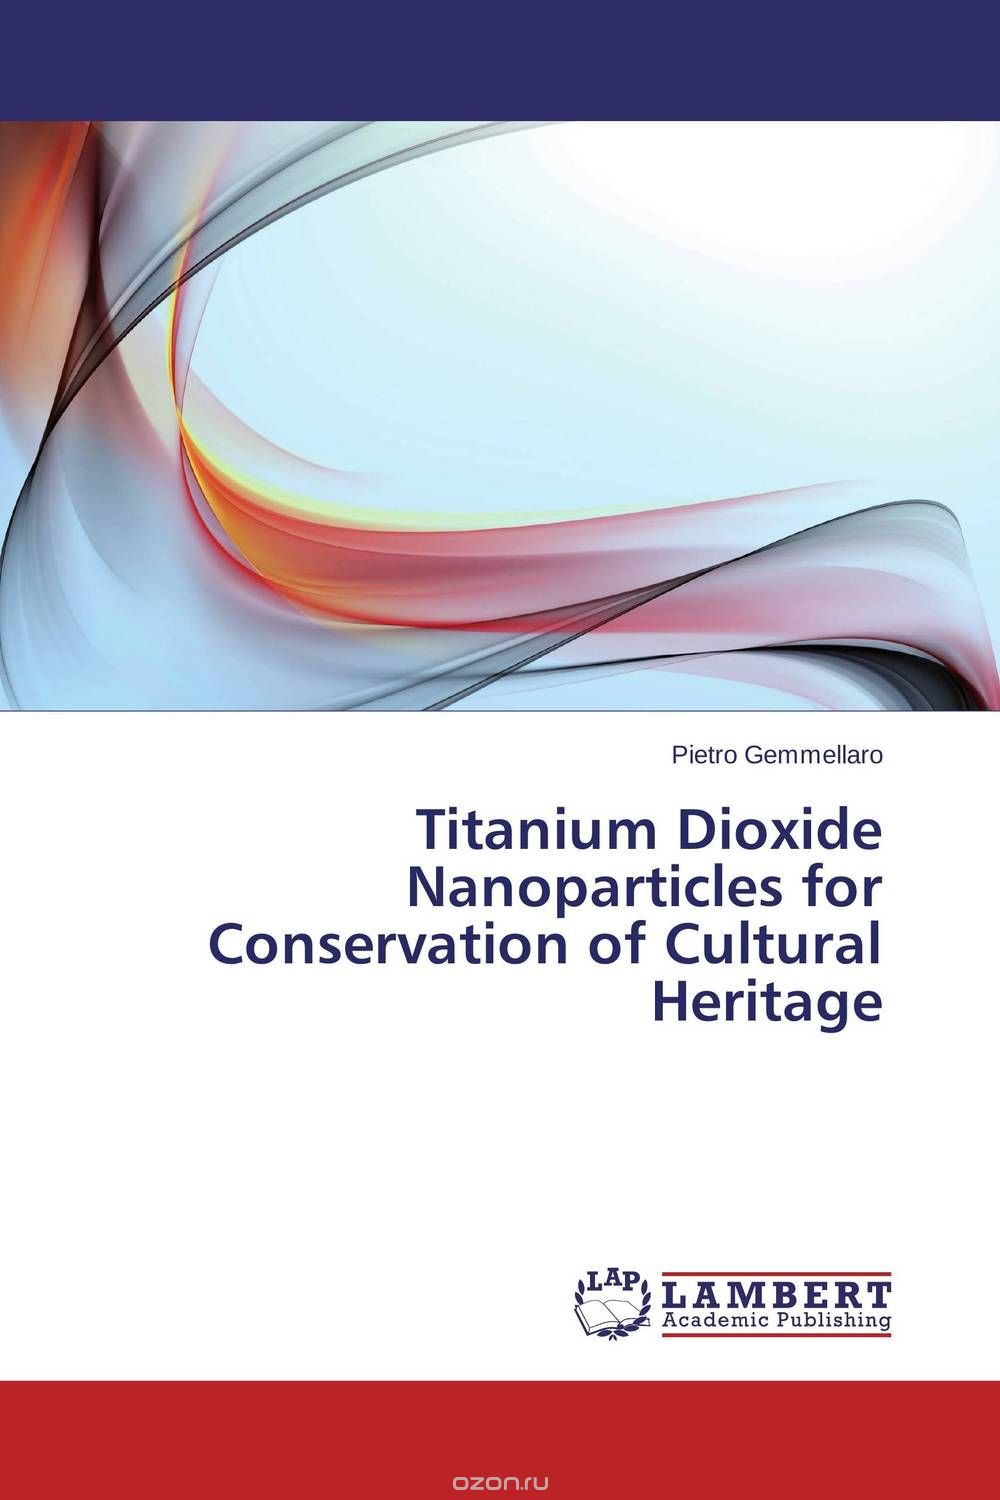 Скачать книгу "Titanium Dioxide Nanoparticles for Conservation of Cultural Heritage"